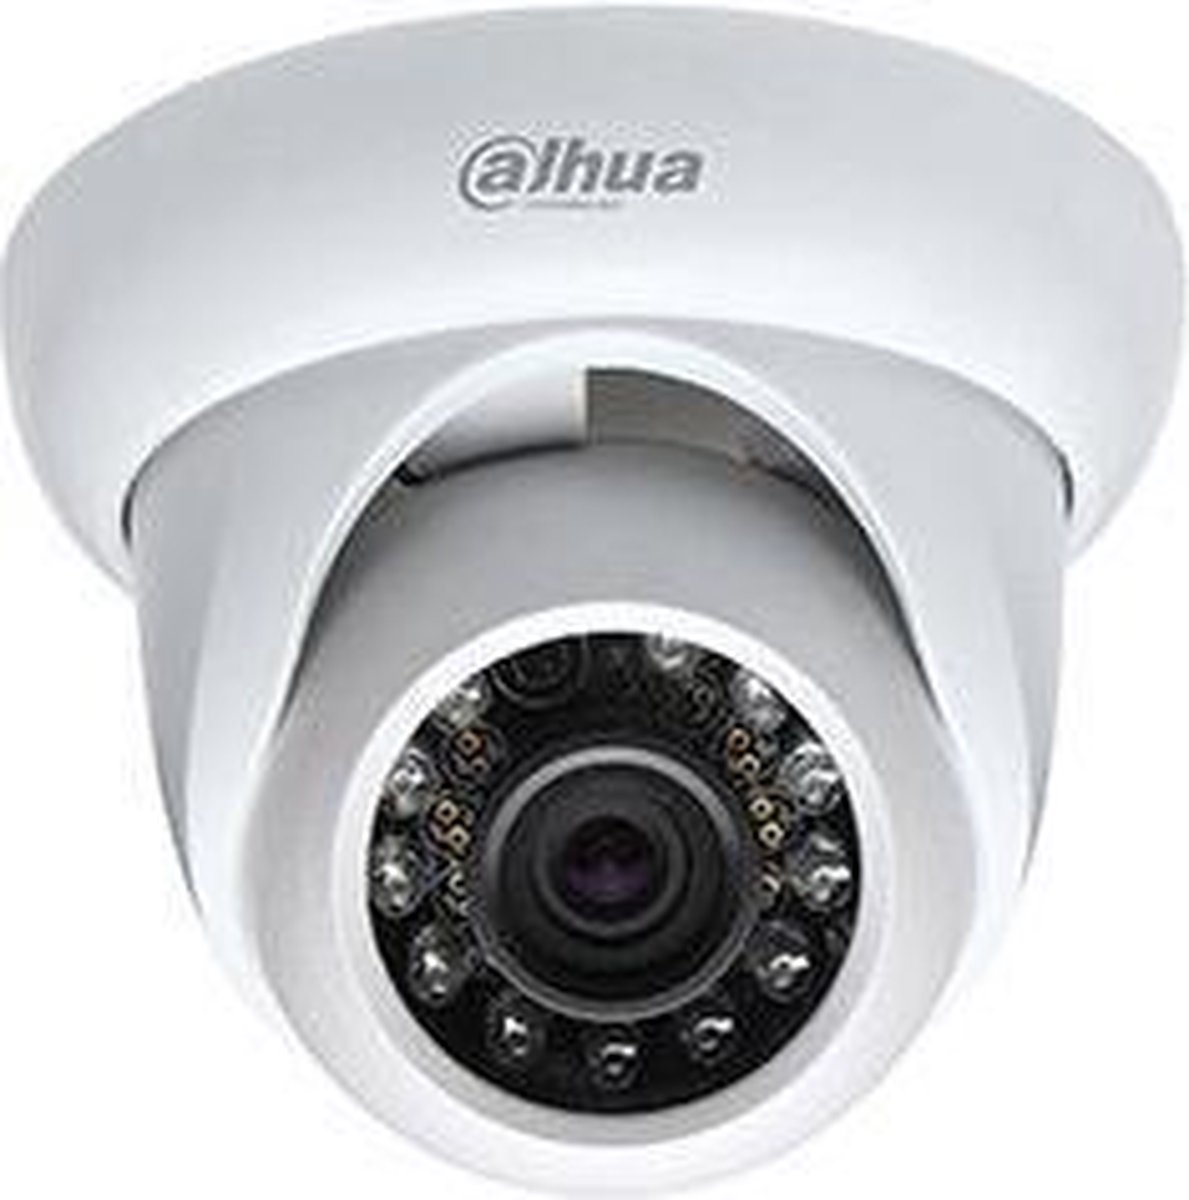 Beveiligingscamera - CVI Speeddome Camera - Full HD - Nachtzicht 150m - 20x Zoom - Draait 360 Graden - Sony CCD Sensor - Buiten Camera - Lens Cleaner - Complete Bewakingscamera